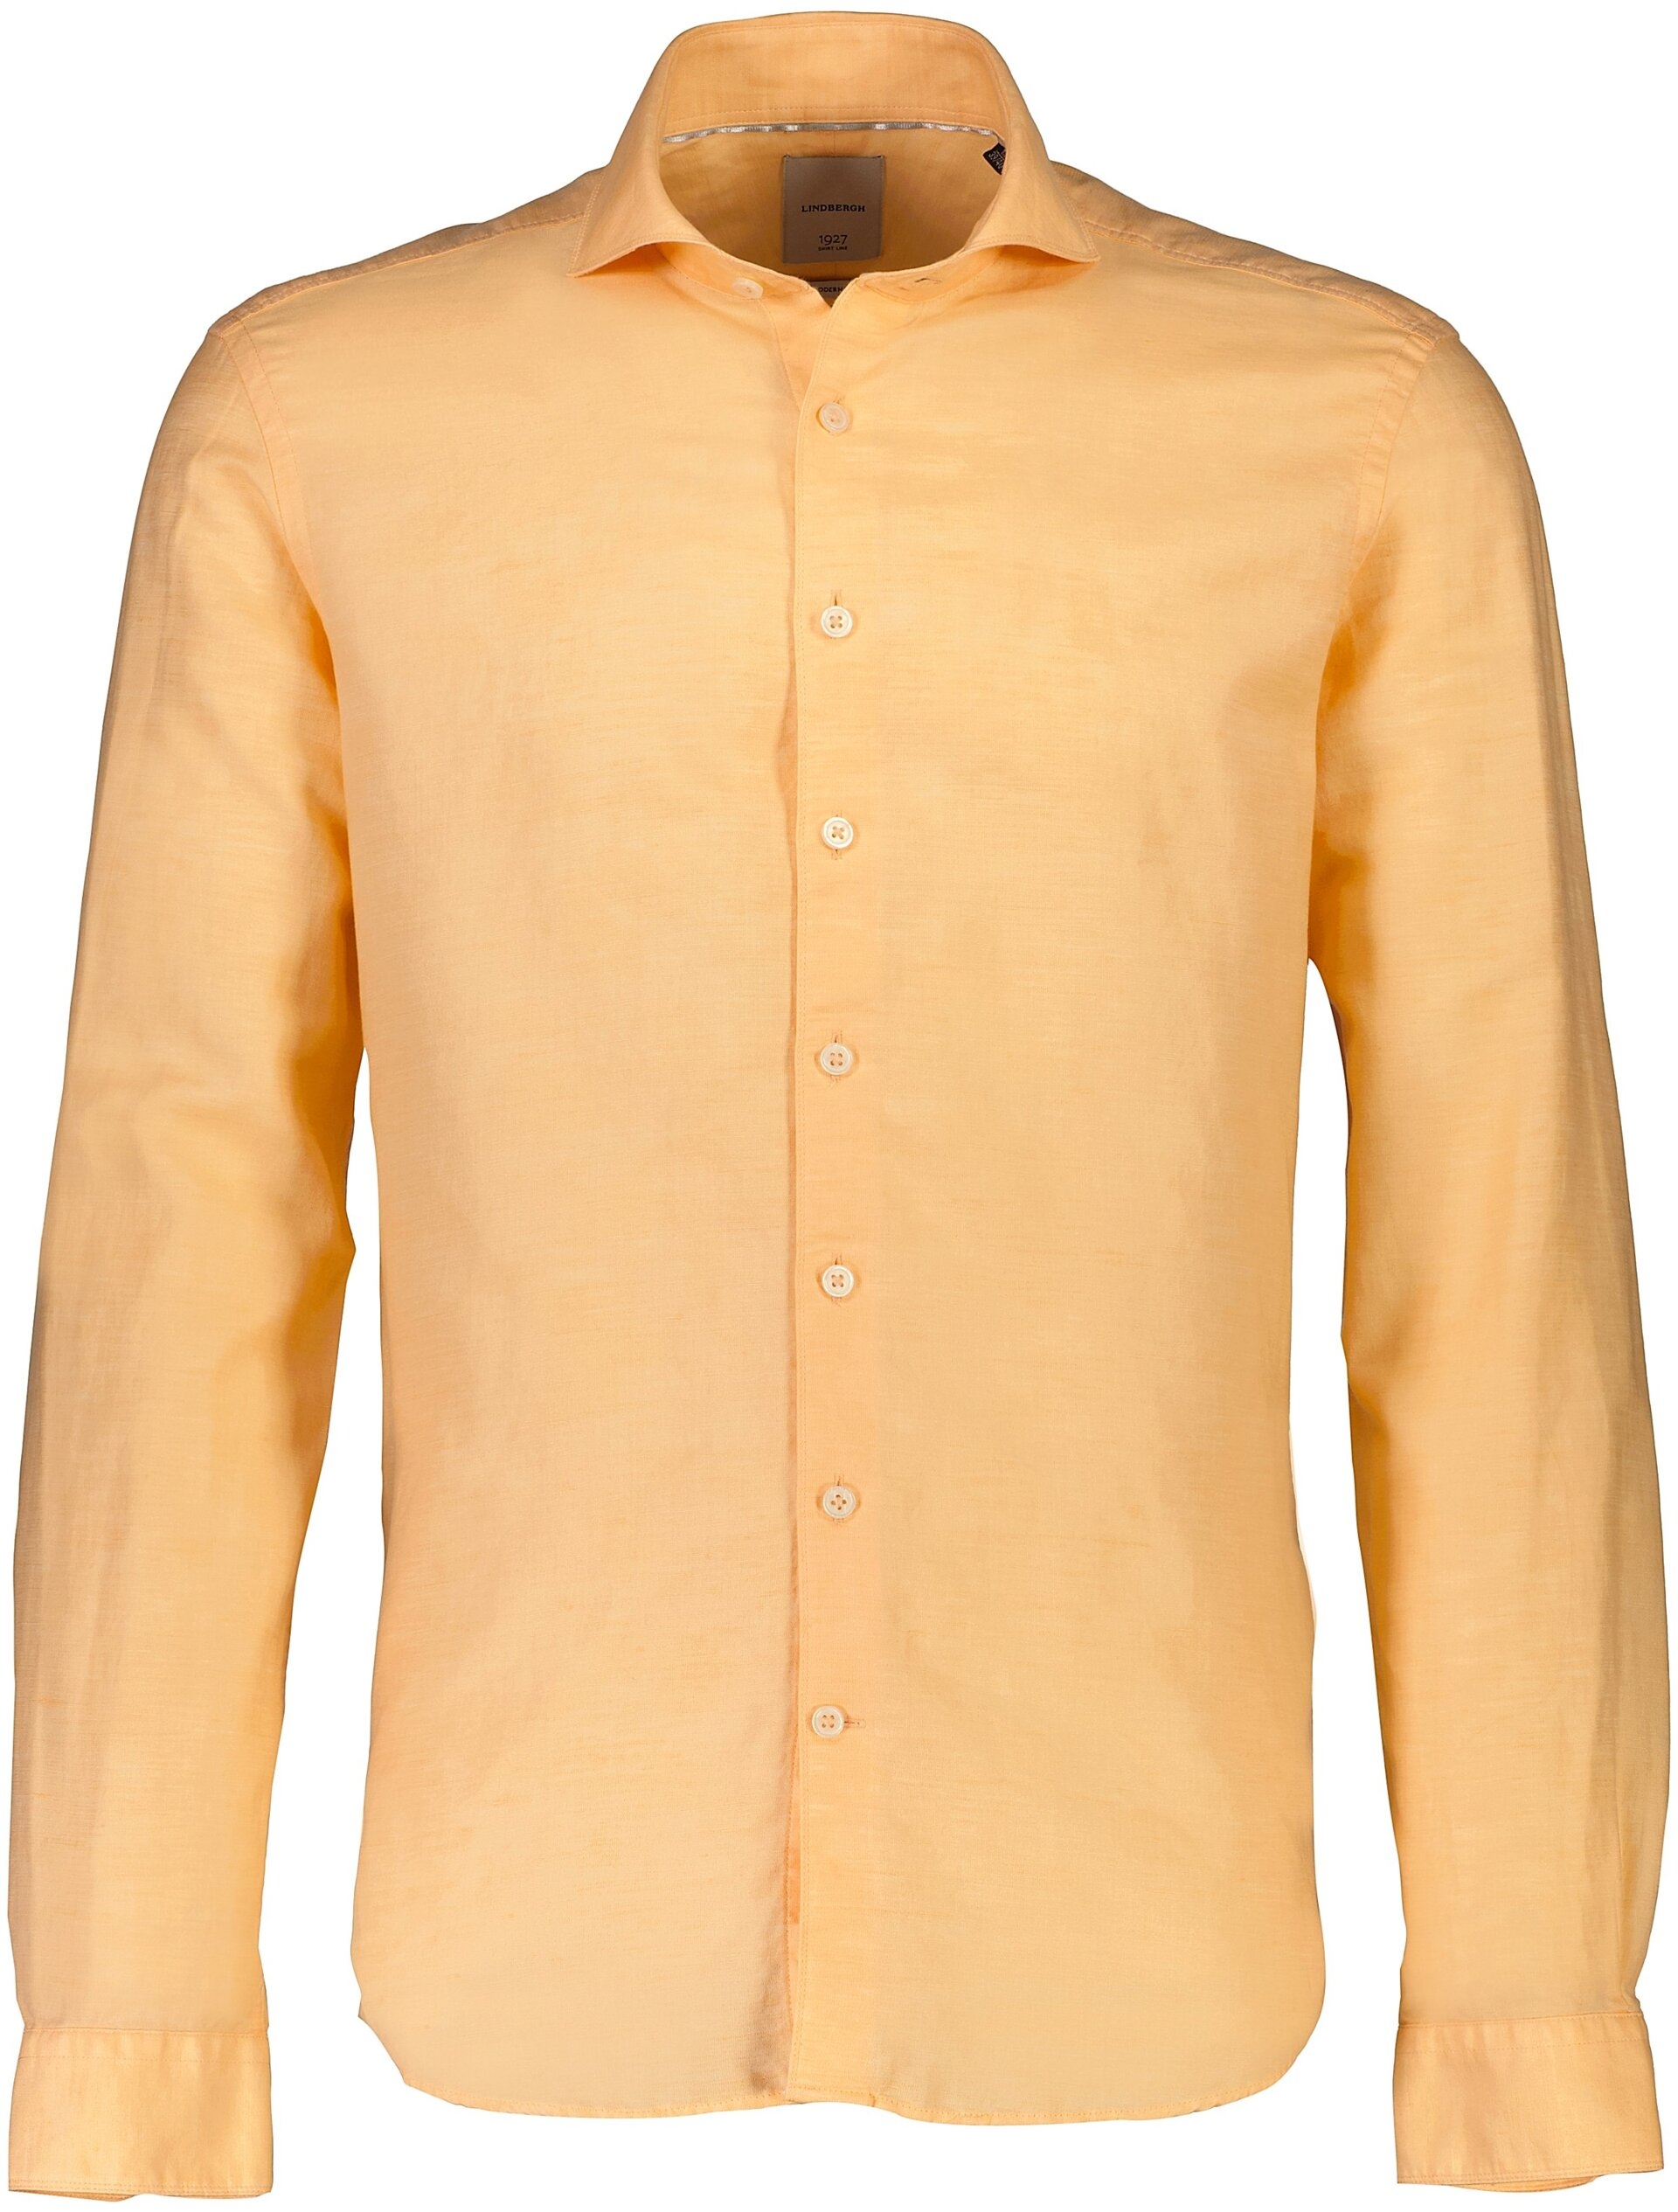 Lindbergh Casual shirt orange / lt apricot mel